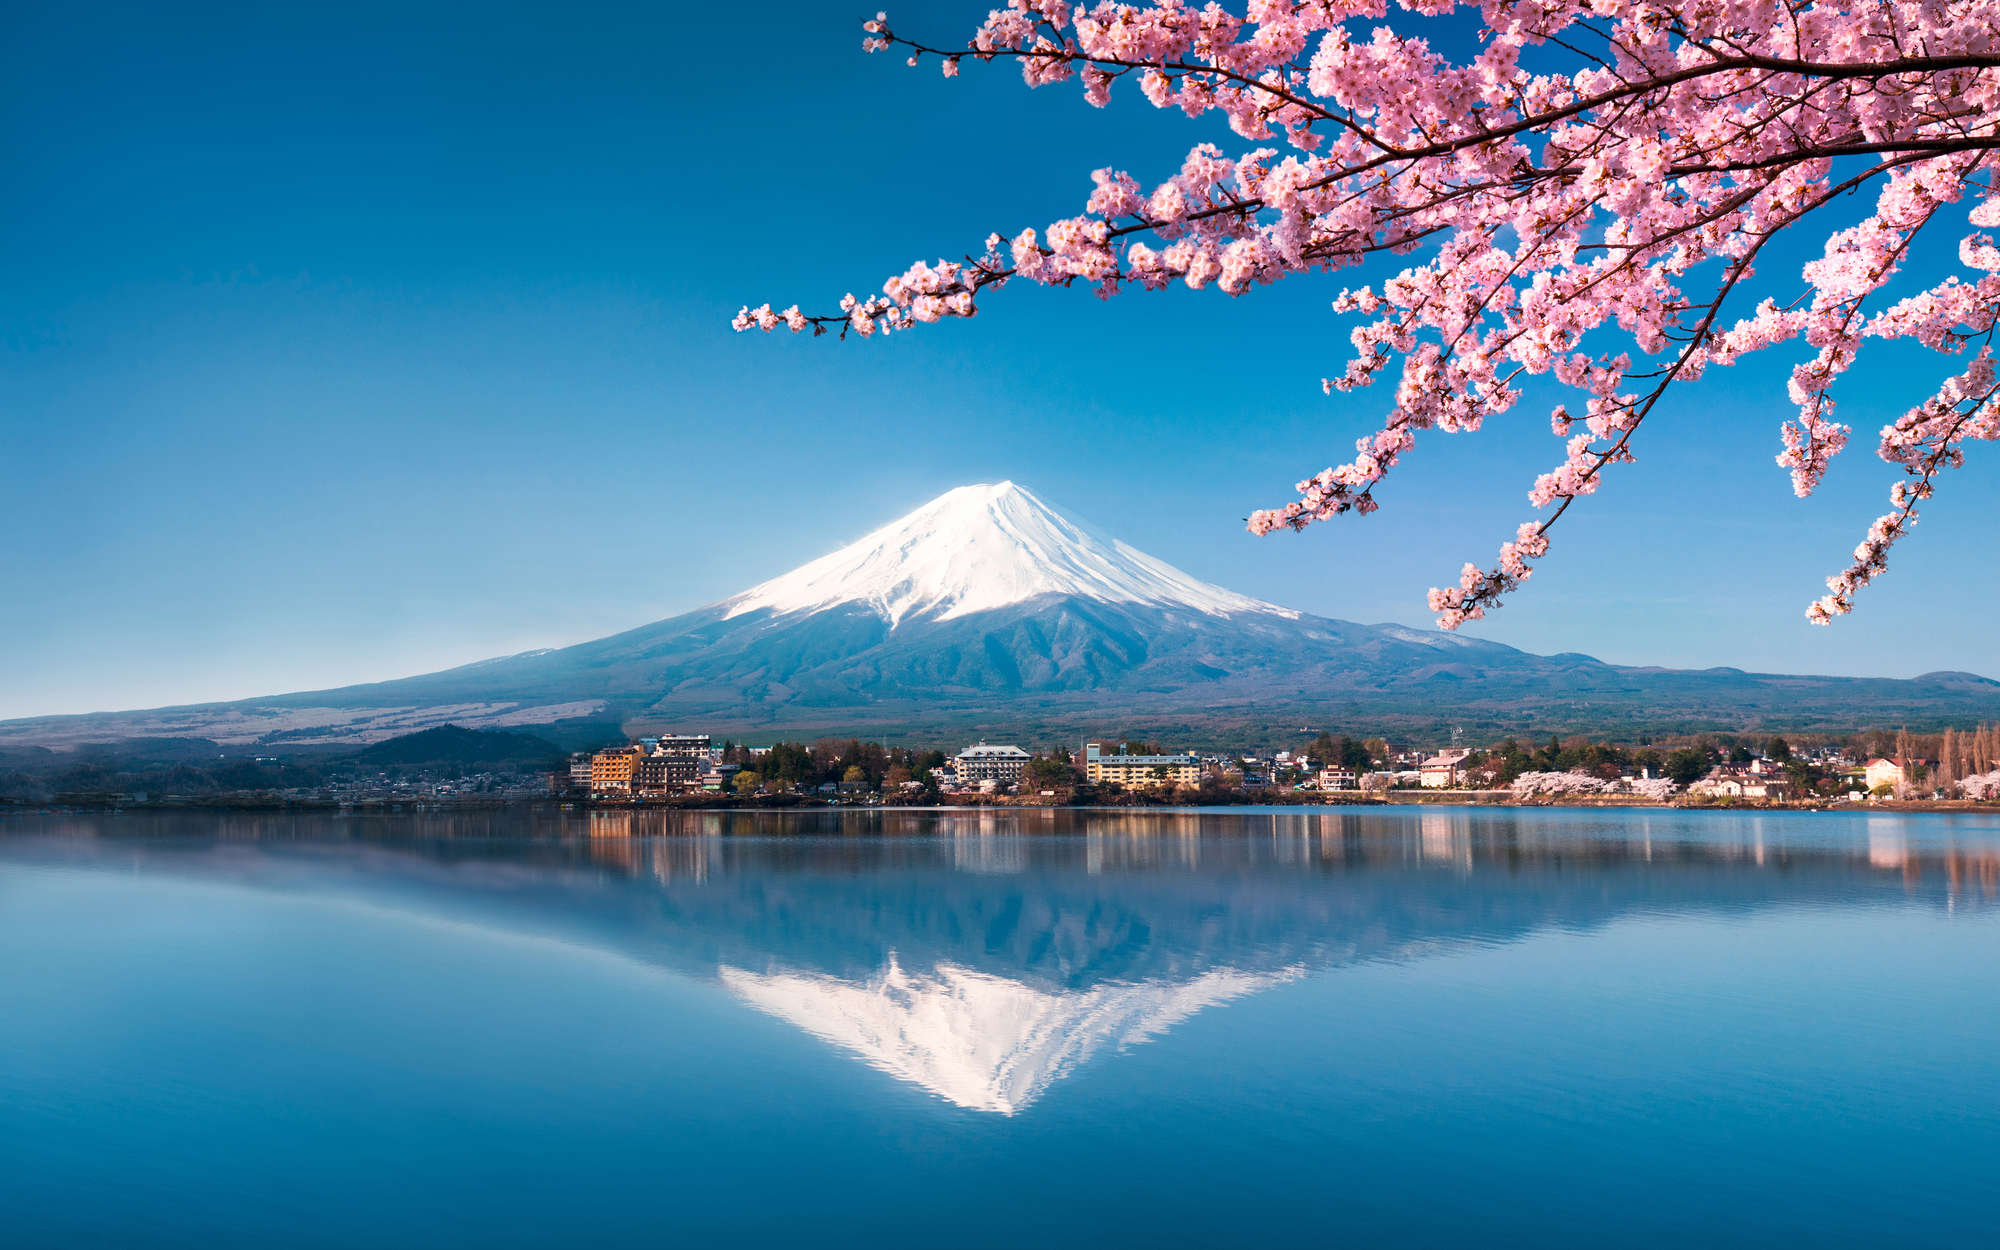             Photo wallpaper Fuji Volcano in Japan - Premium smooth fleece
        